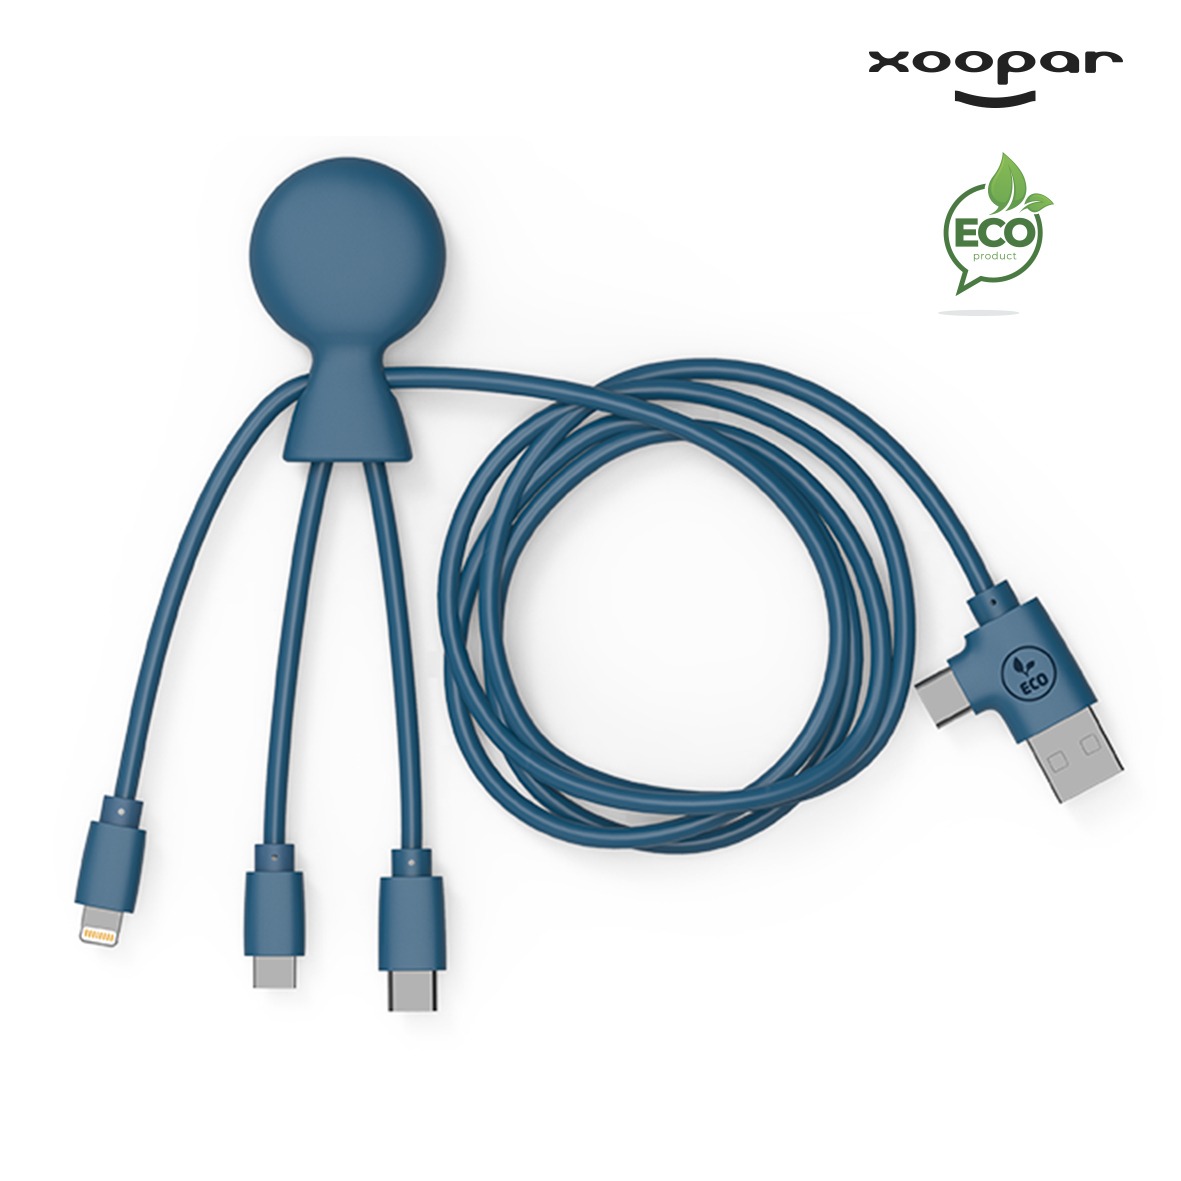 Cable multi connectiques – Mr bio Long recycle Xoopar personnalise-1